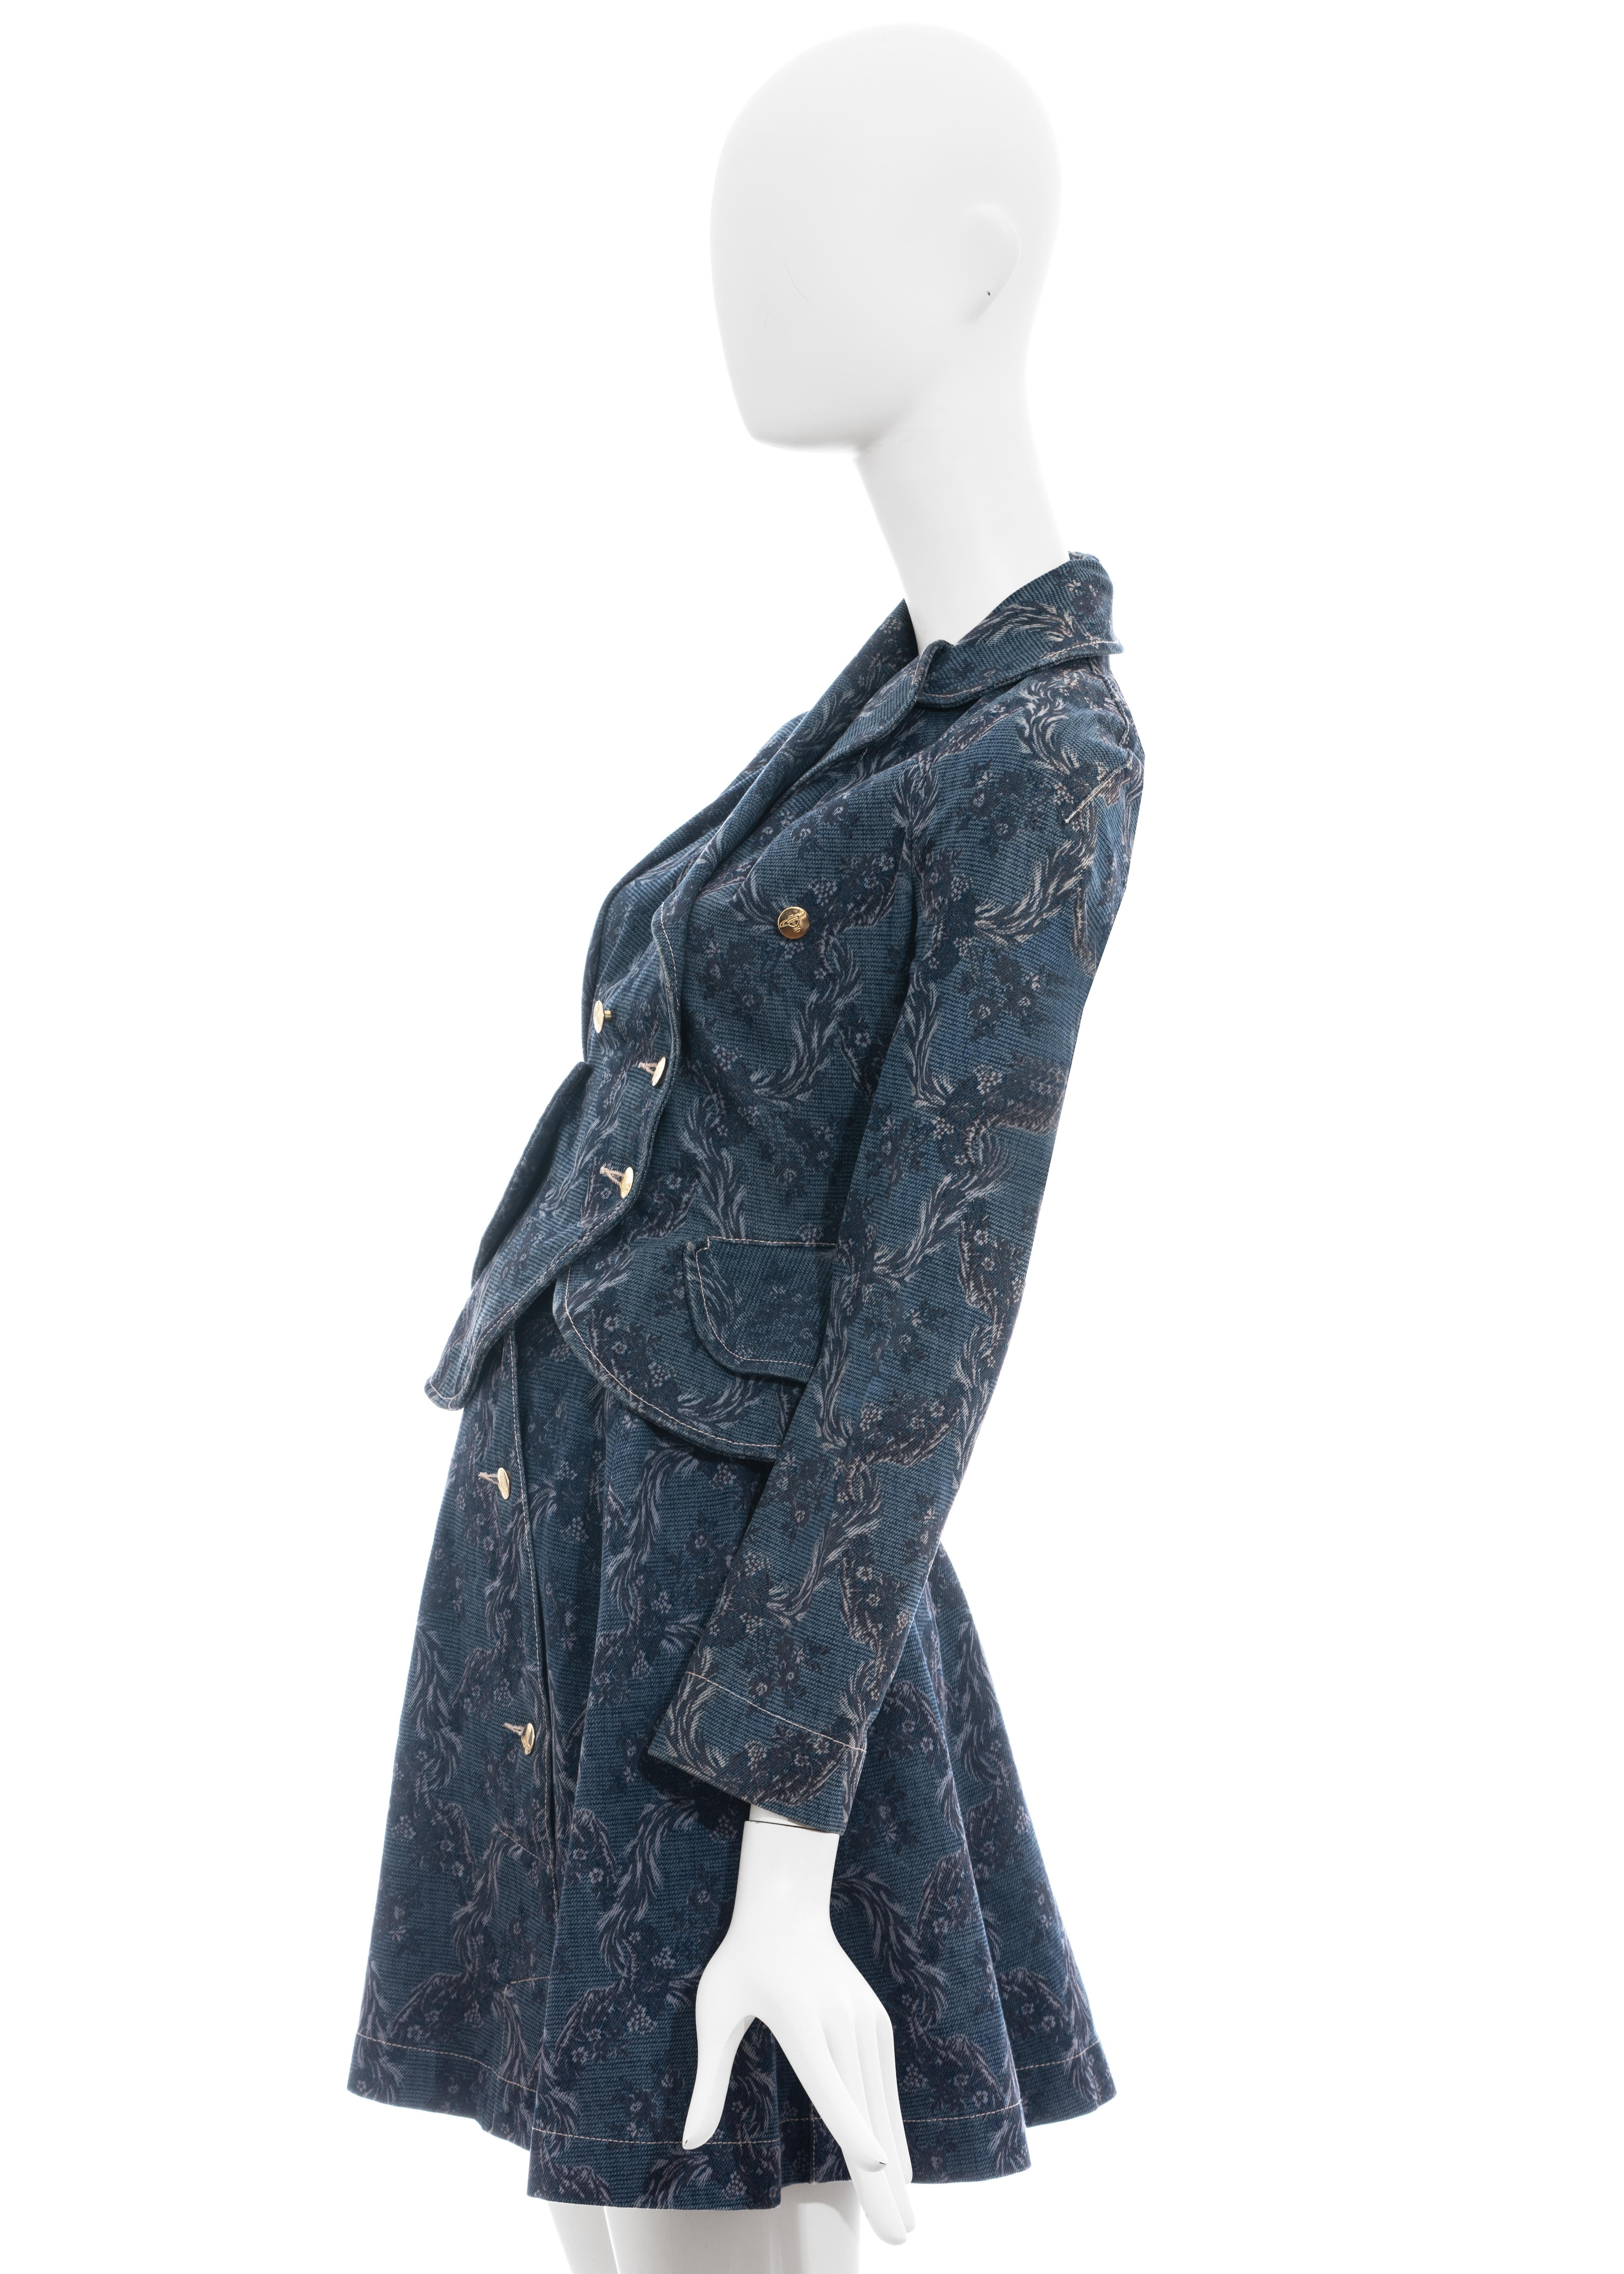 Vivienne Westwood blue denim jacquard peplum jacket skirt suit, fw 1996 In Excellent Condition For Sale In London, GB